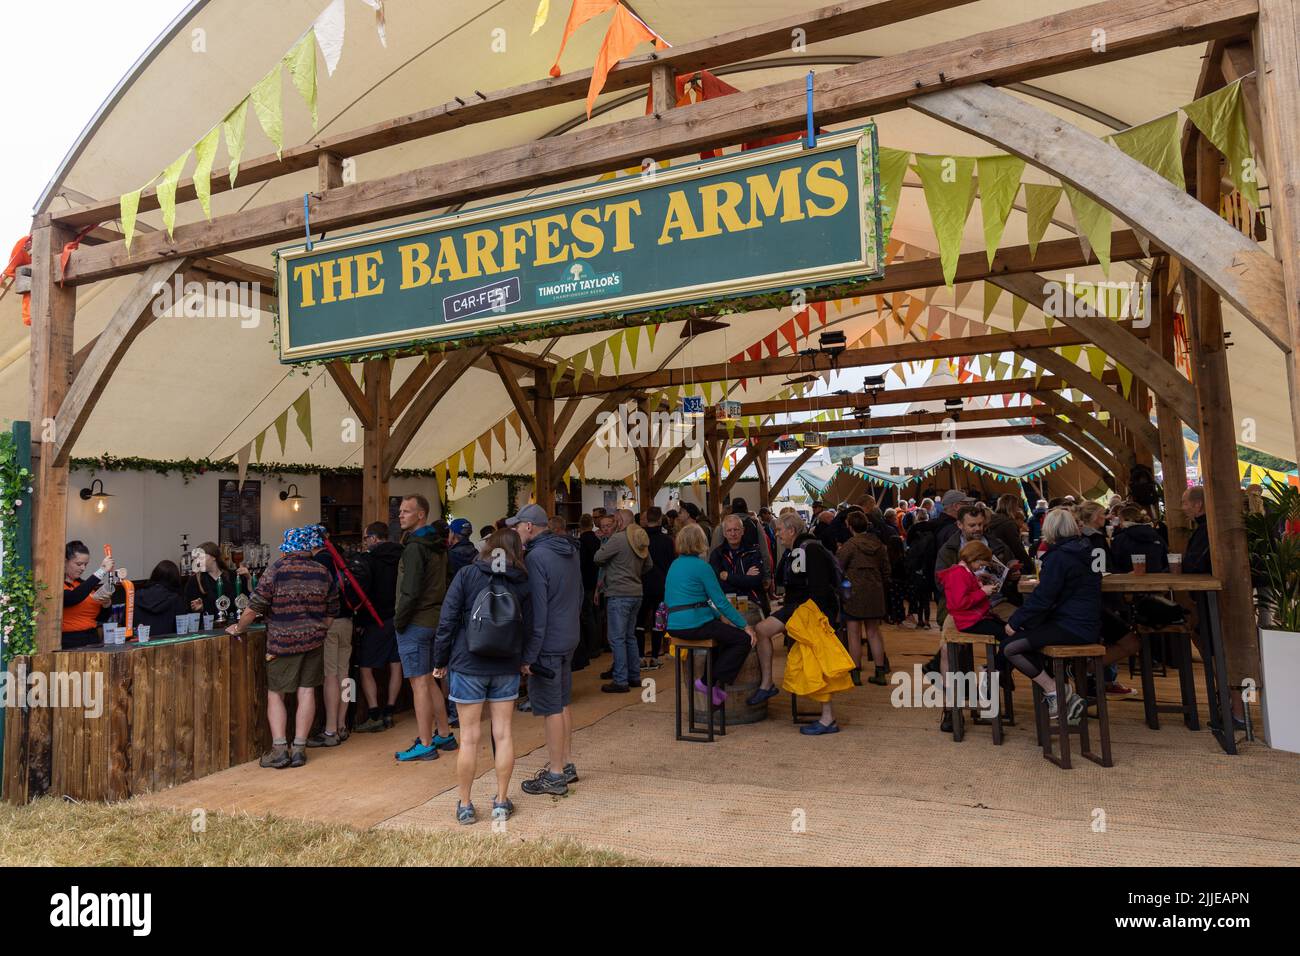 The Barfest Arms, Carfest Foto Stock